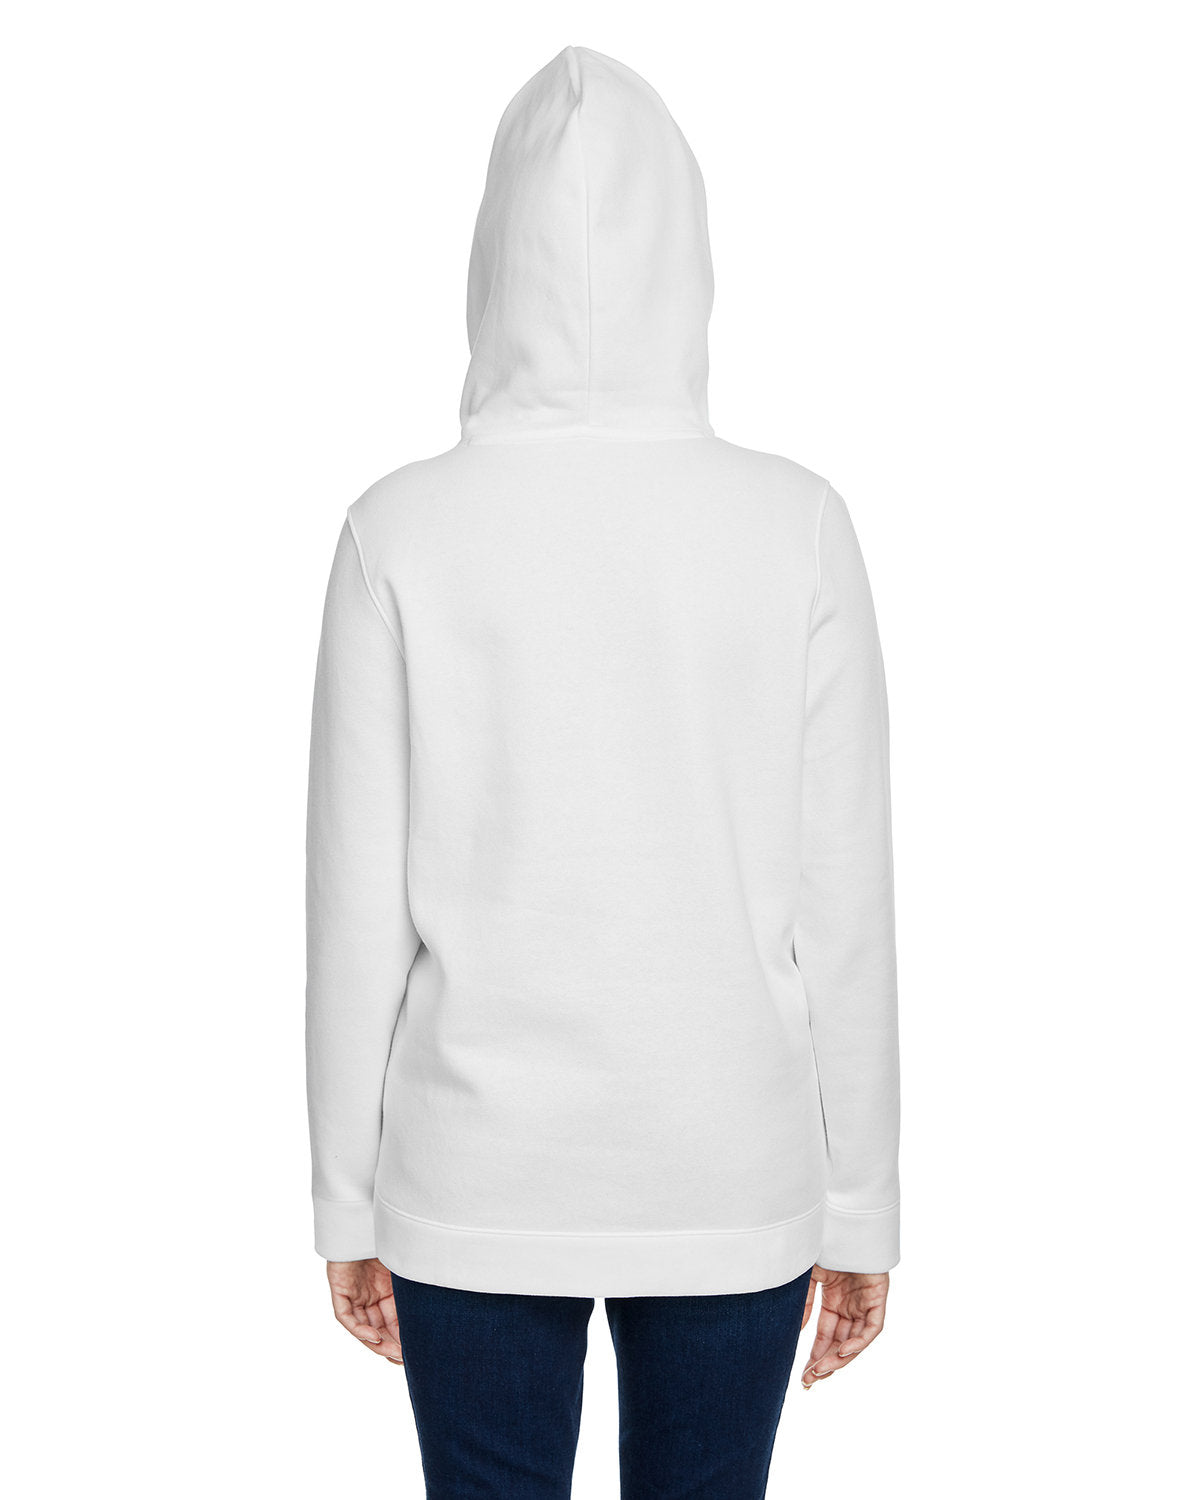 Under Armour Ladies Hustle Pullover Branded Hooded Sweatshirts, White